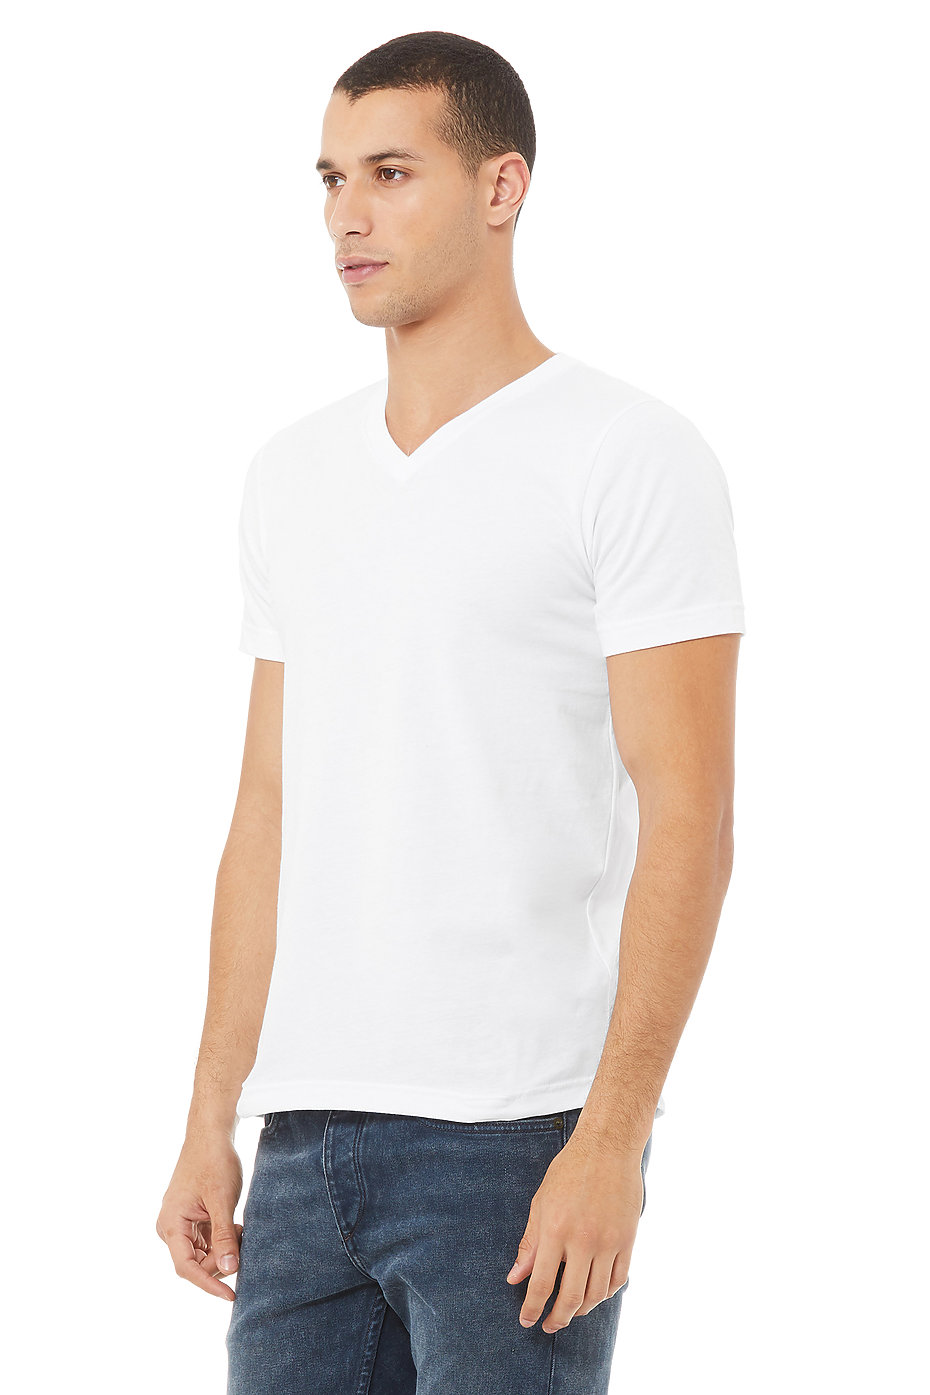 Bella+Canvas Unisex Triblend Long Sleeve V-Neck T-Shirt